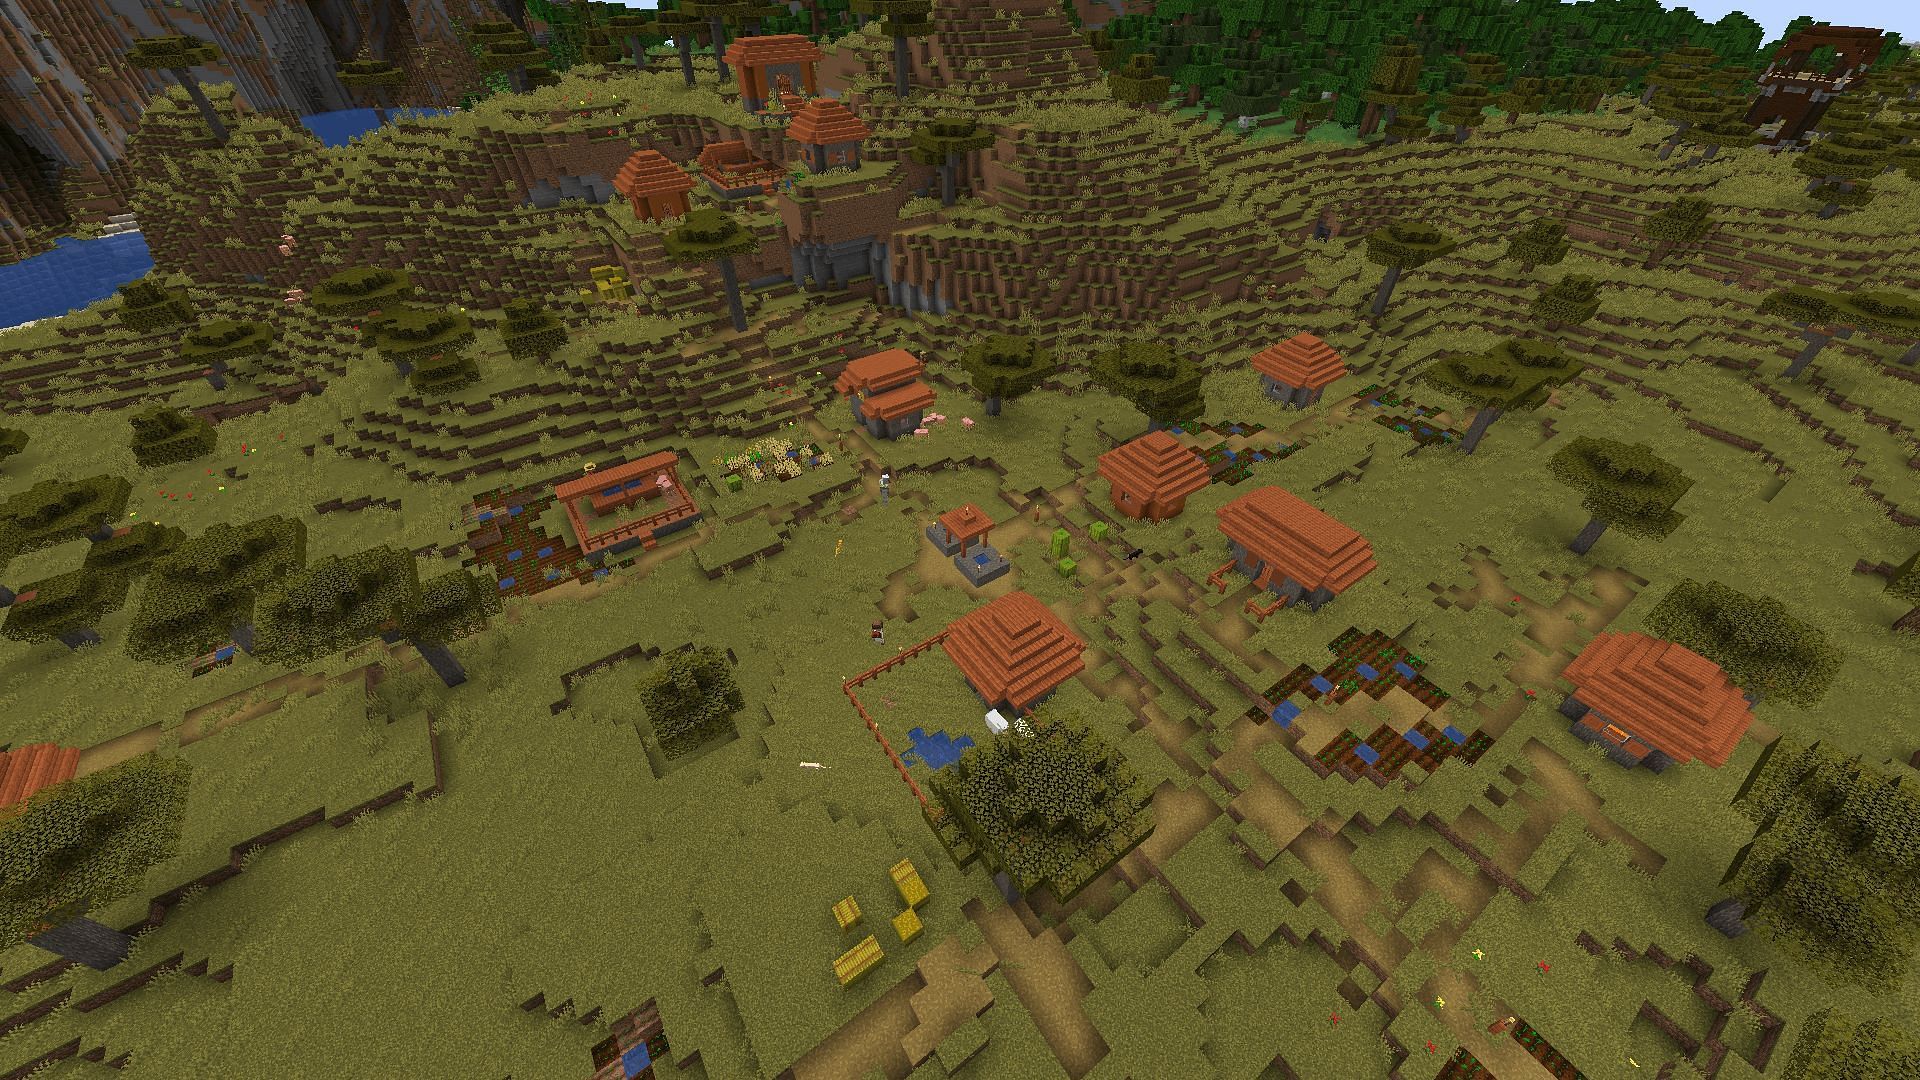 The savannah village near spawn (Image via Minecraft)